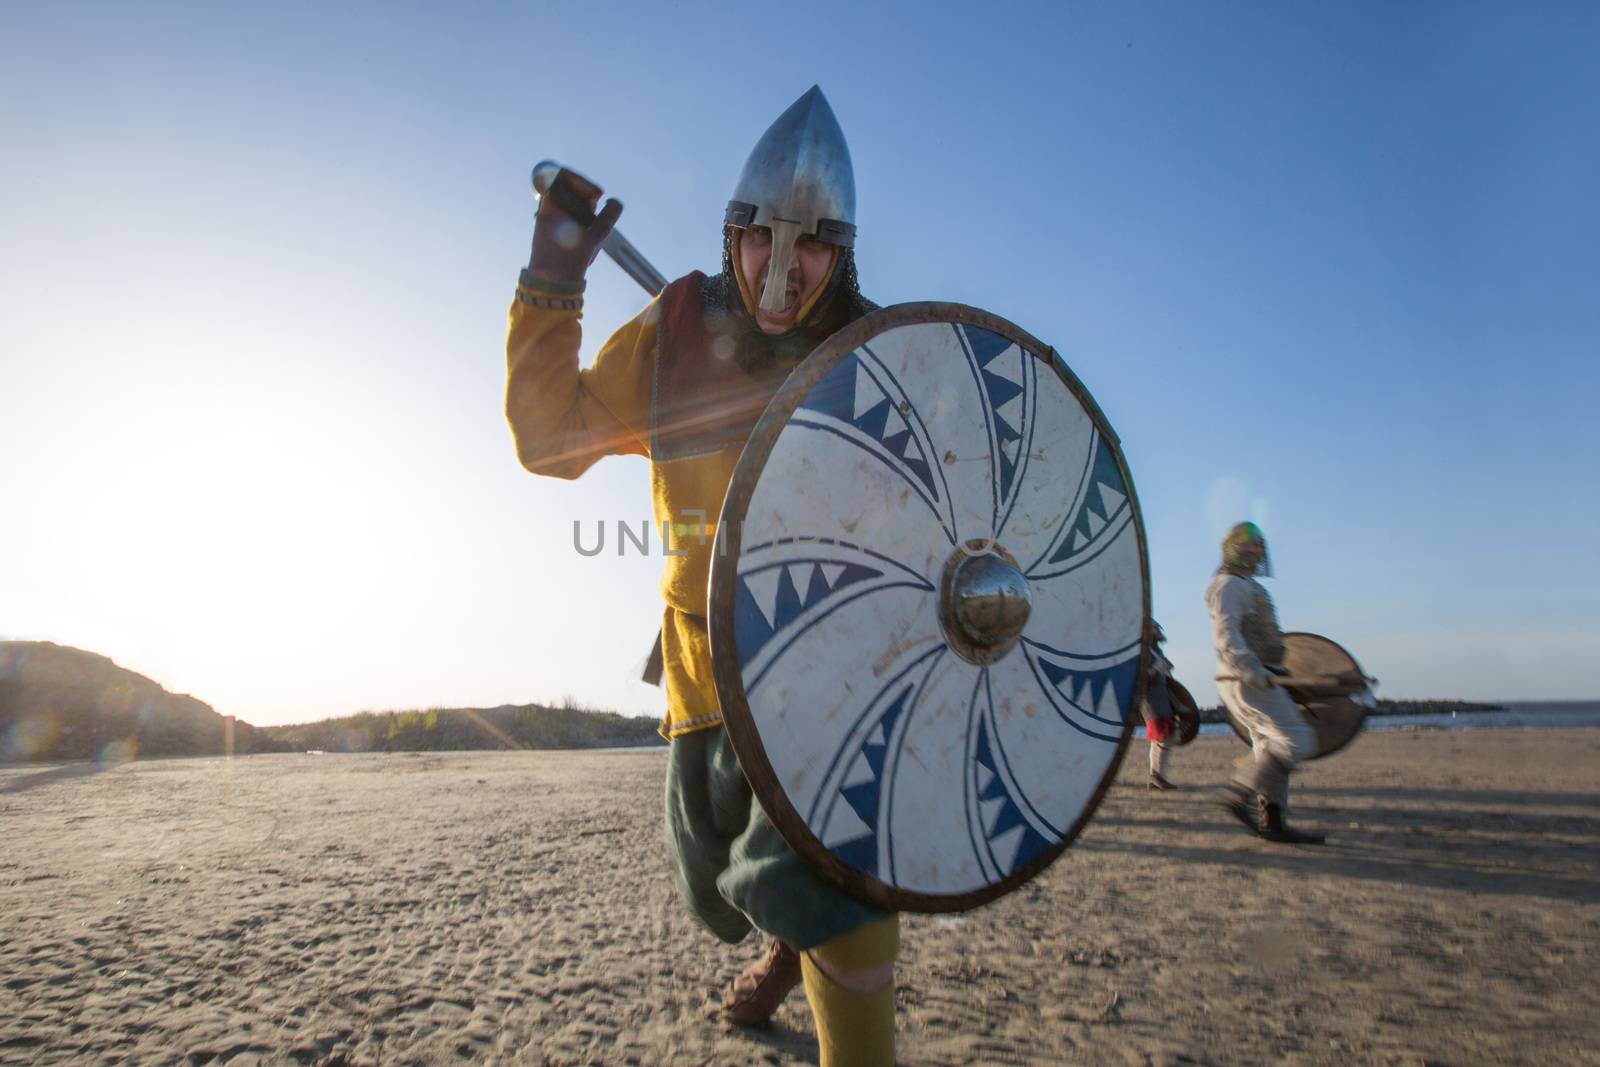 Slavic warrior reenactor with axe and shield training outdoors at seaside , running at camera